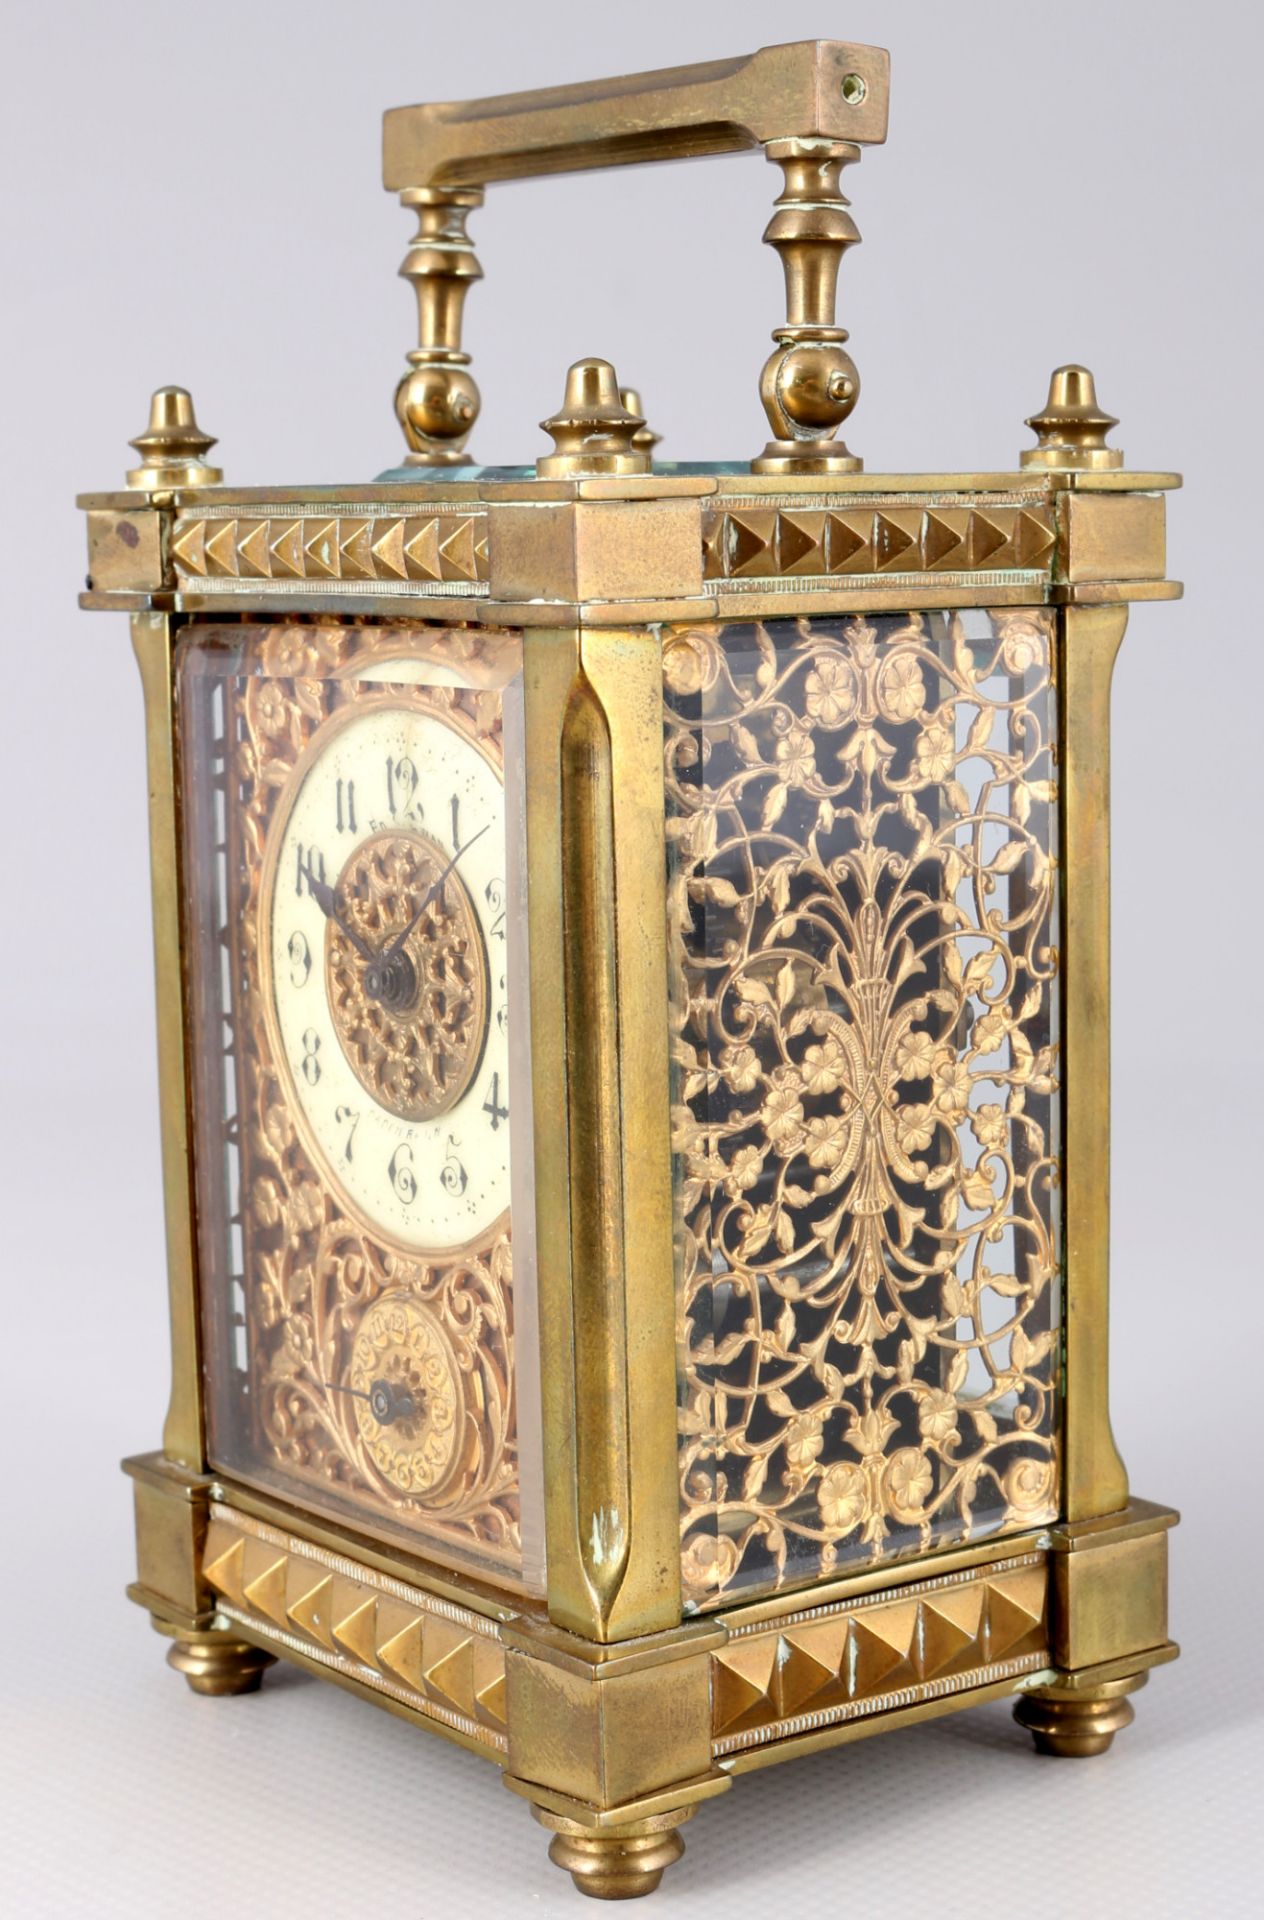 French carriage clock grand sonnerie around 1900, Reiseuhr Grand Sonnerie mit Wecker, - Image 2 of 6